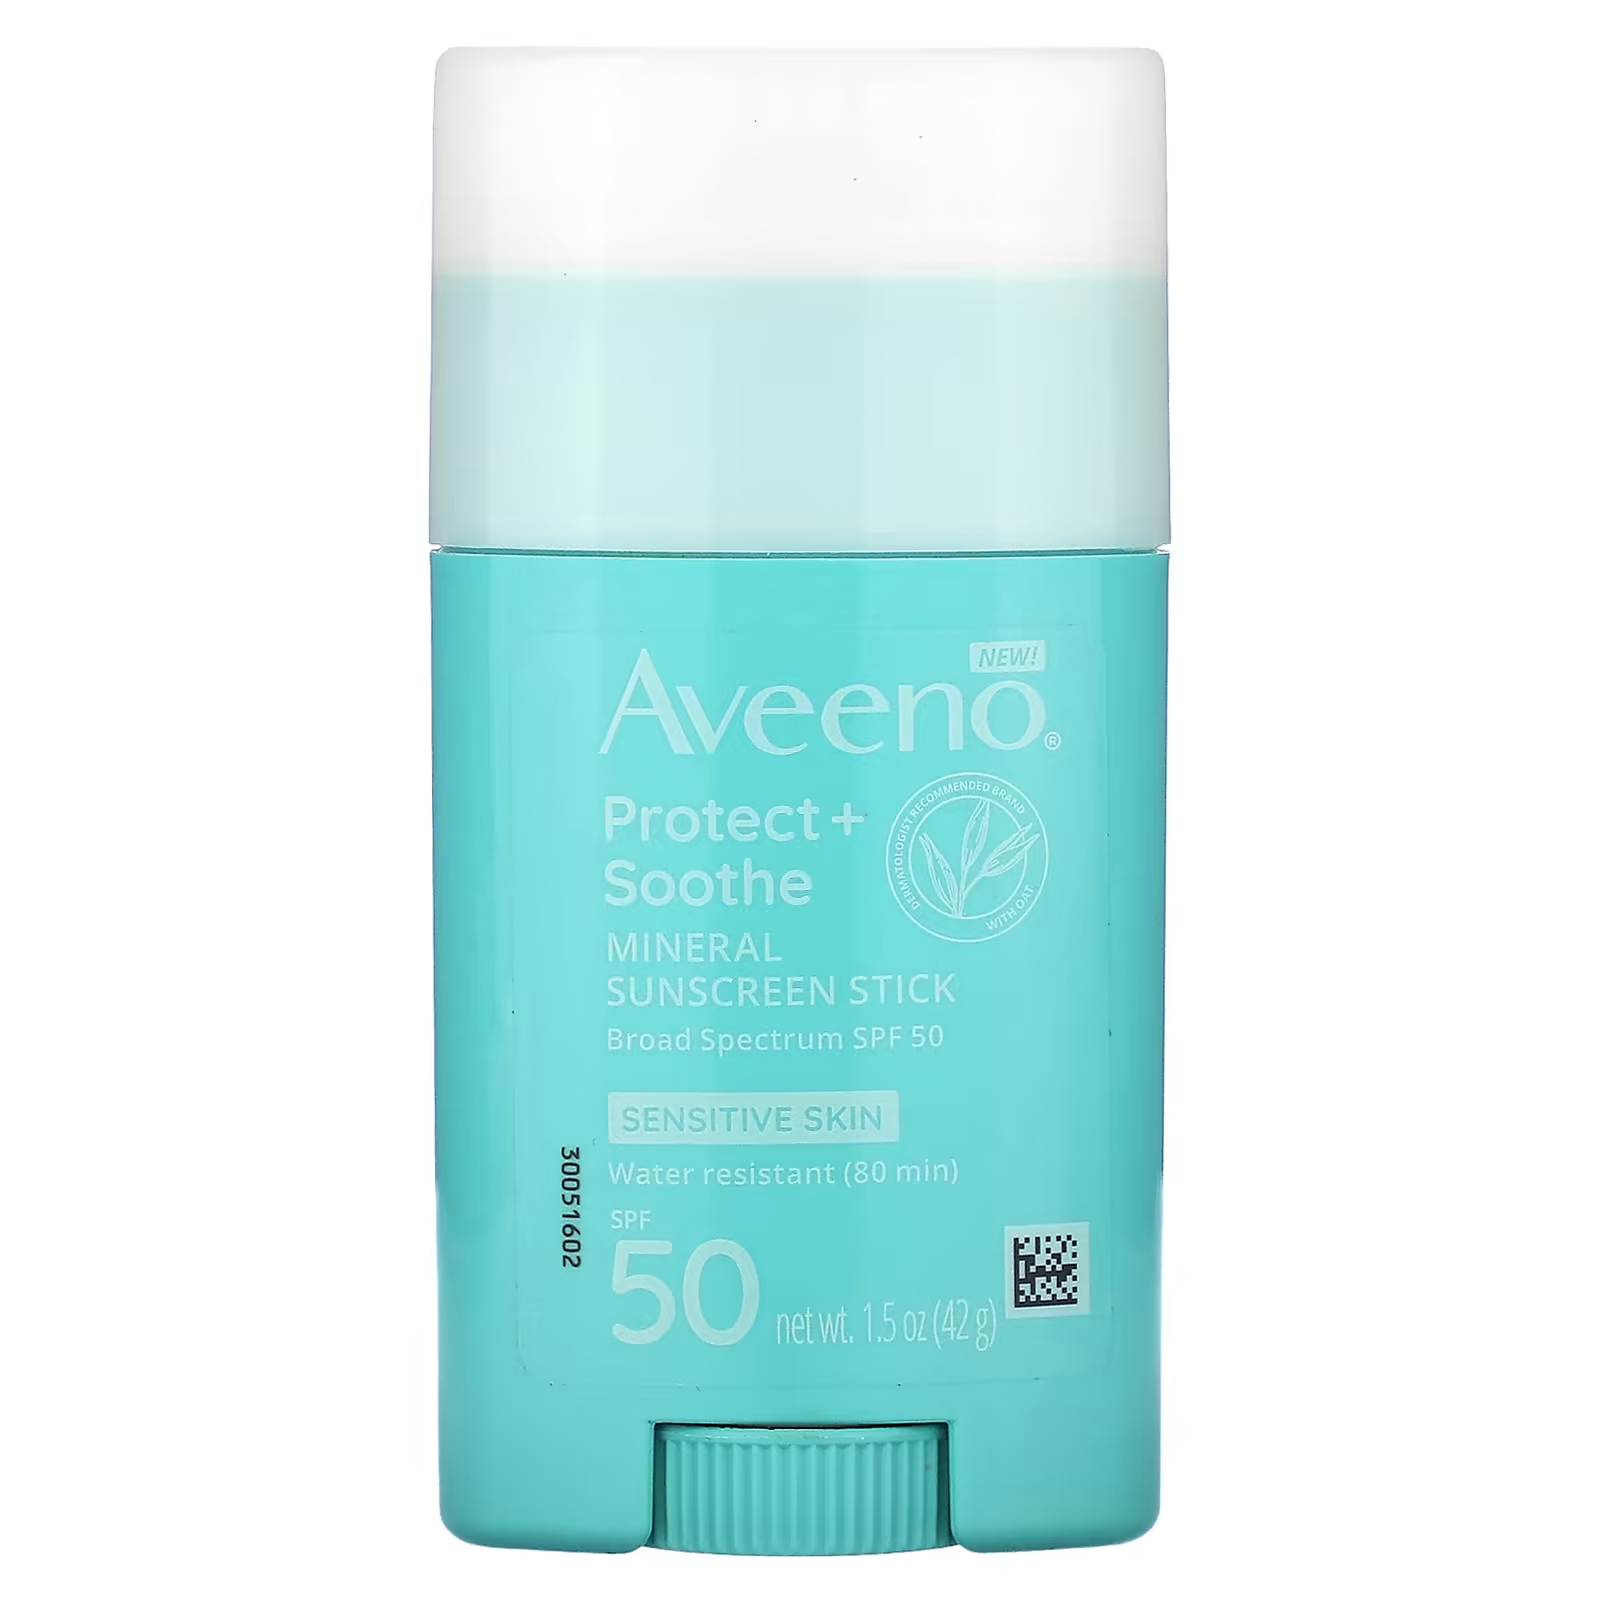 Минеральный солнцезащитный крем Aveeno Protect + Soothe SPF 50, без запаха, 42 гр. neutrogena sunscreen stick beach defense spf 50 uva uvb 1 5 oz 42 g